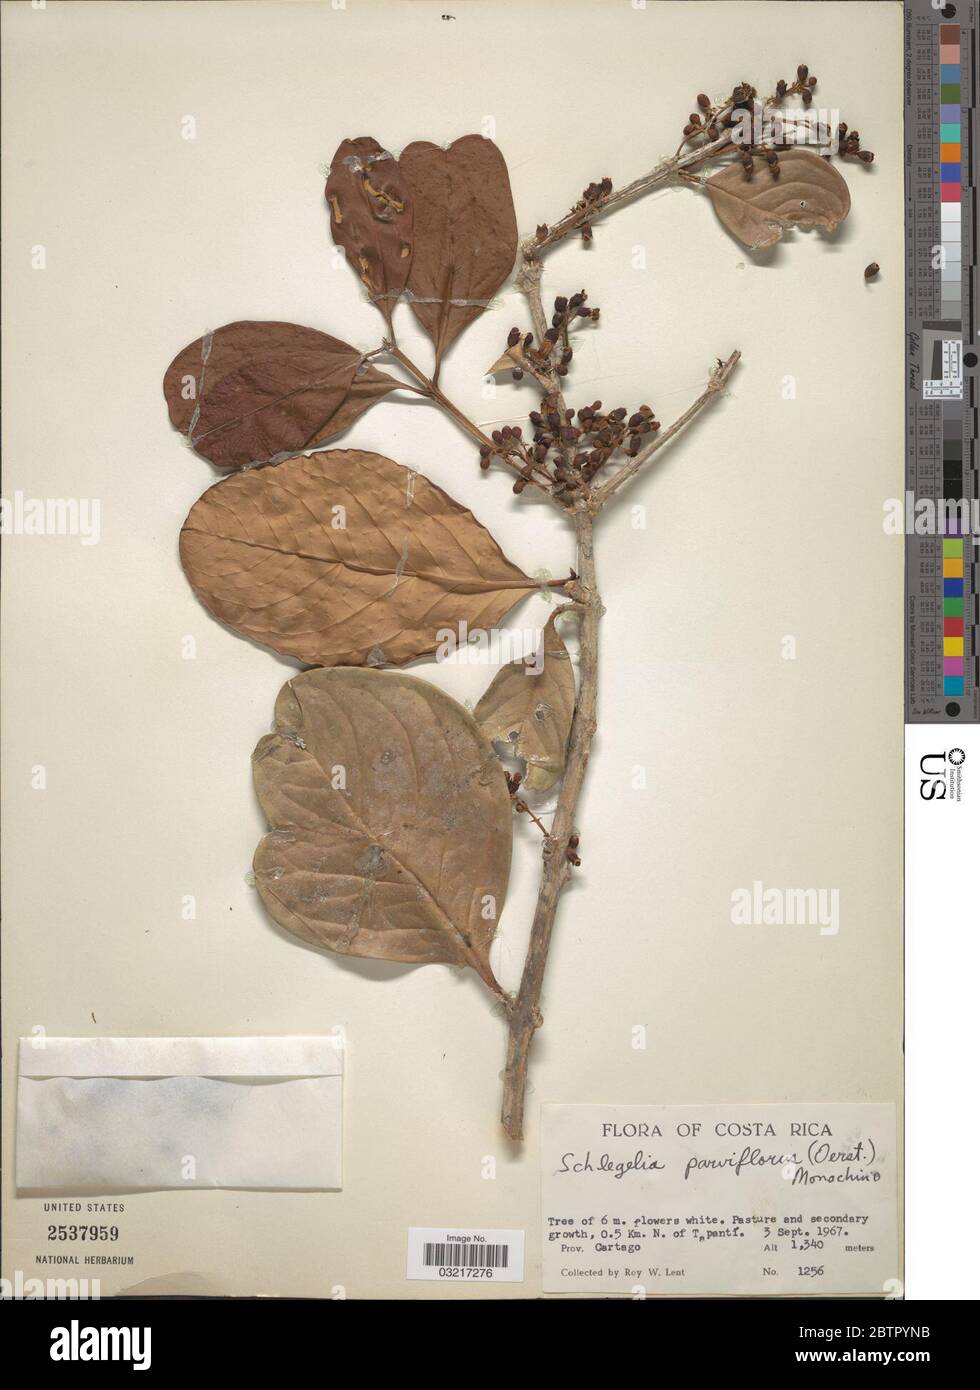 Schlegelia parviflora Oerst Monach. Stock Photo